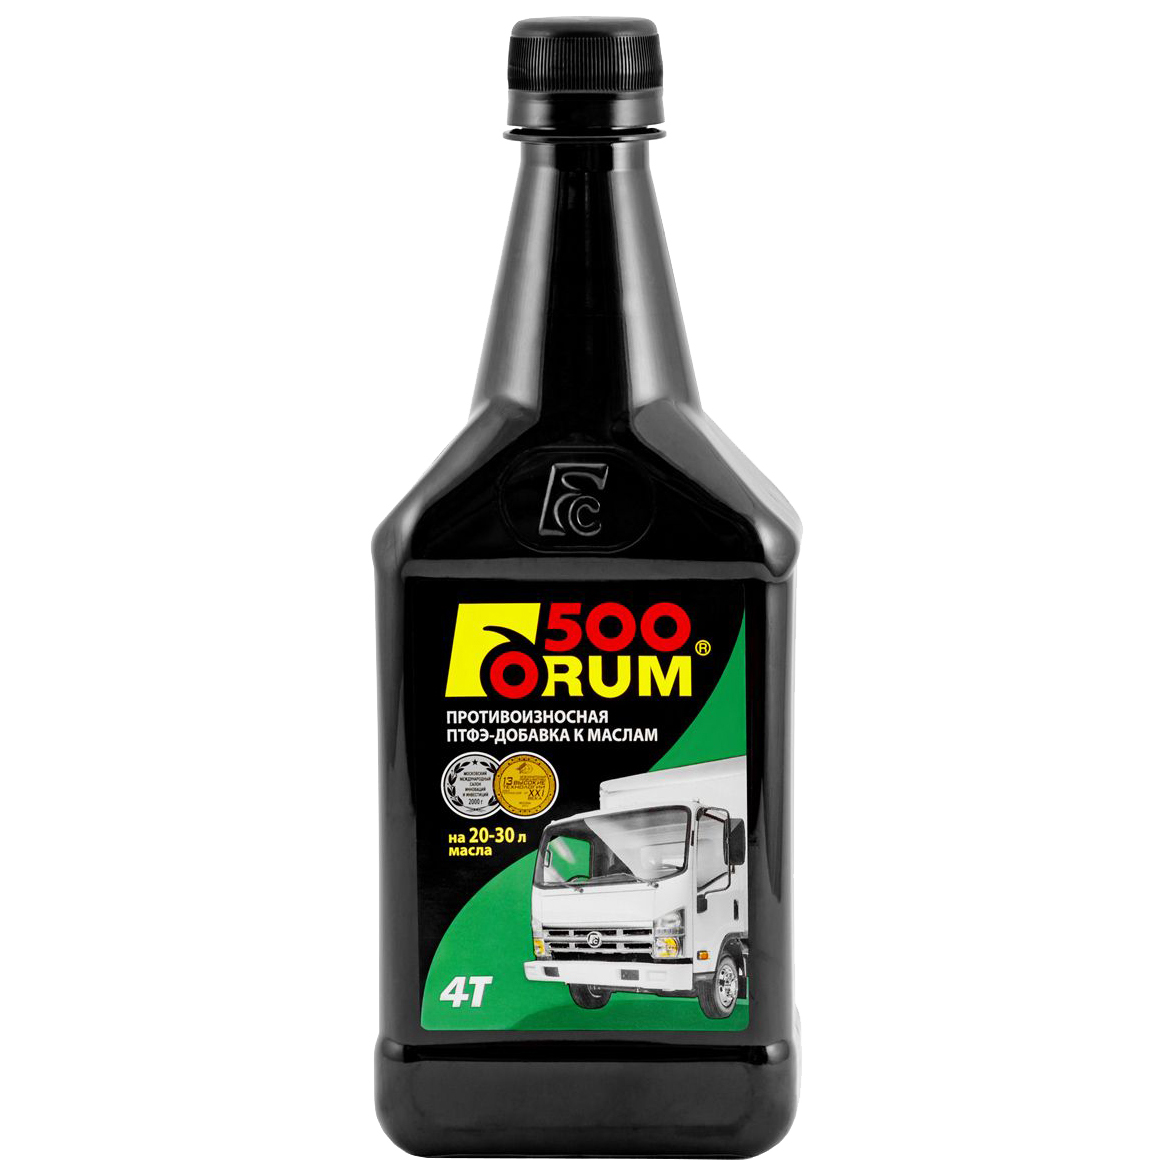 Присадка в масло Владфорум FR523 Форум-500, на 20-30 л масла, 500 мл